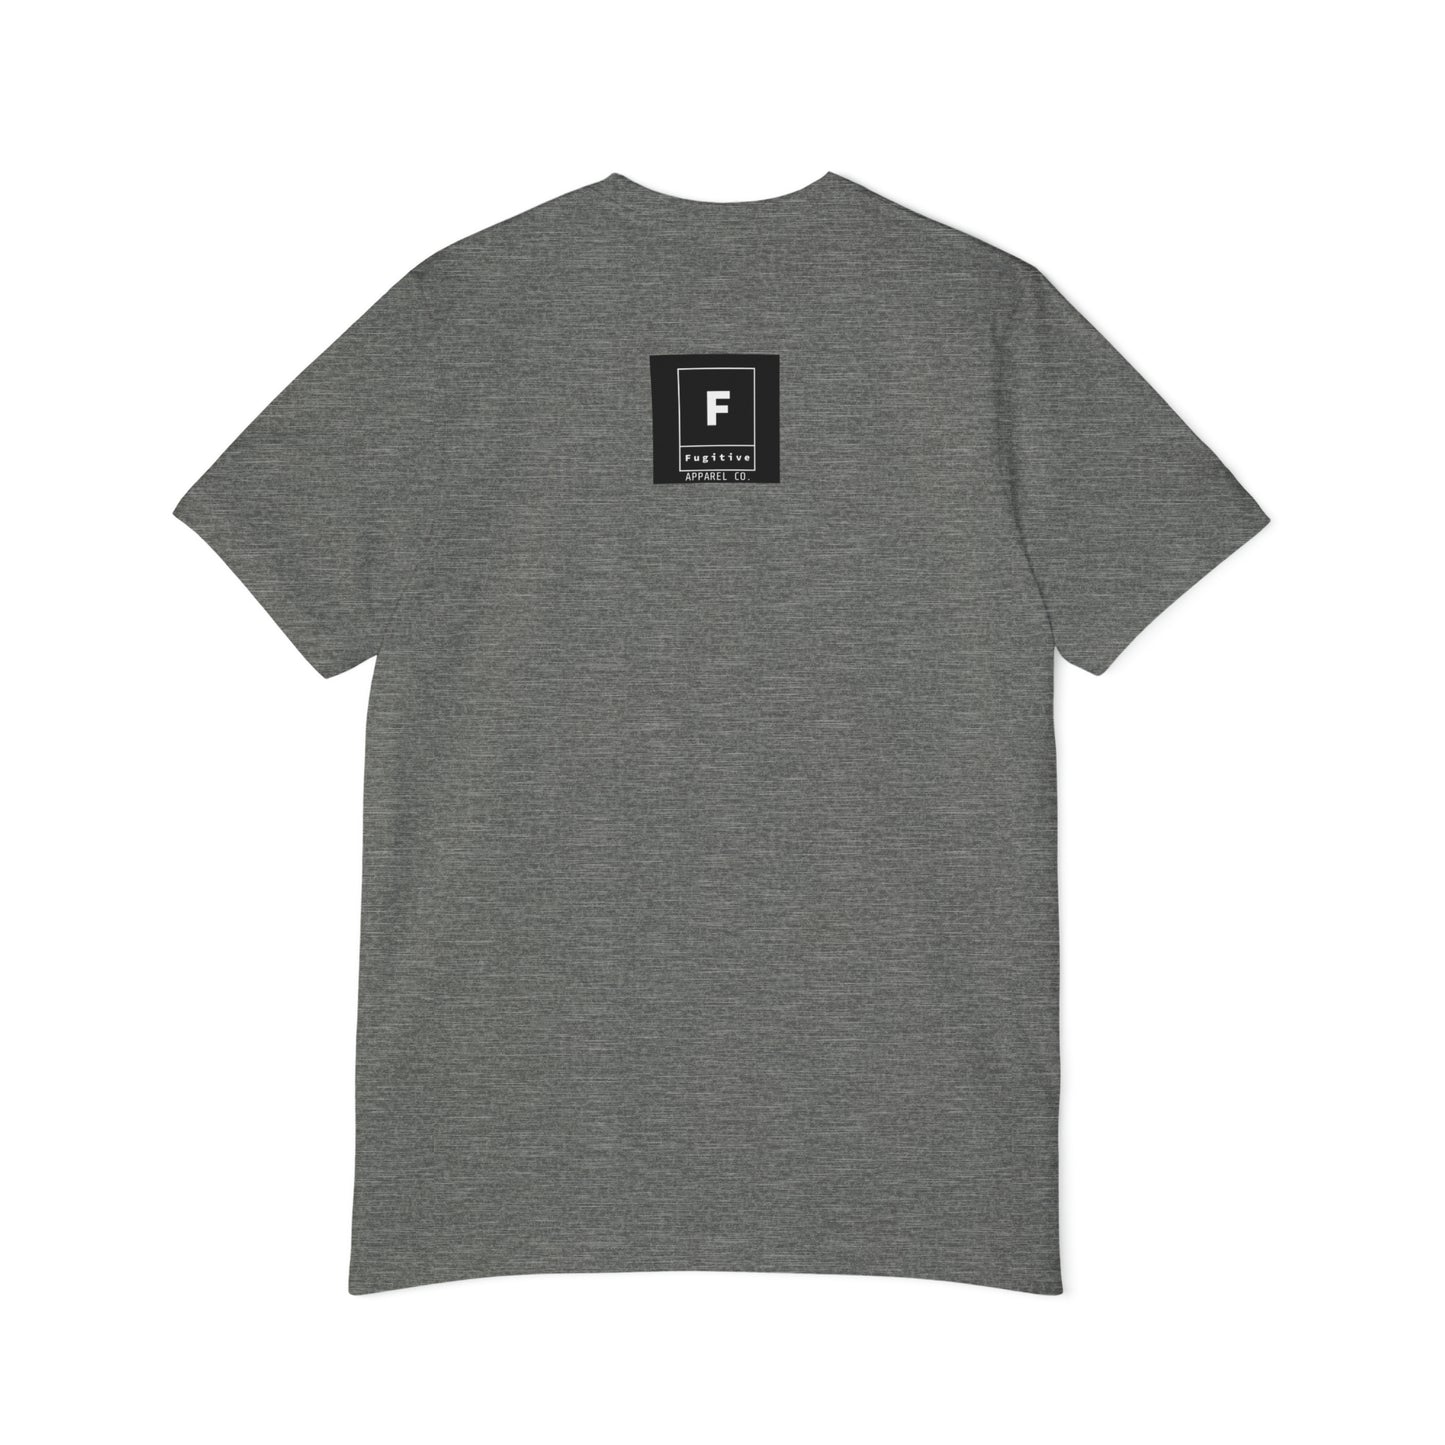 Copy of USA-Made Unisex Short-Sleeve Jersey T-Shirt